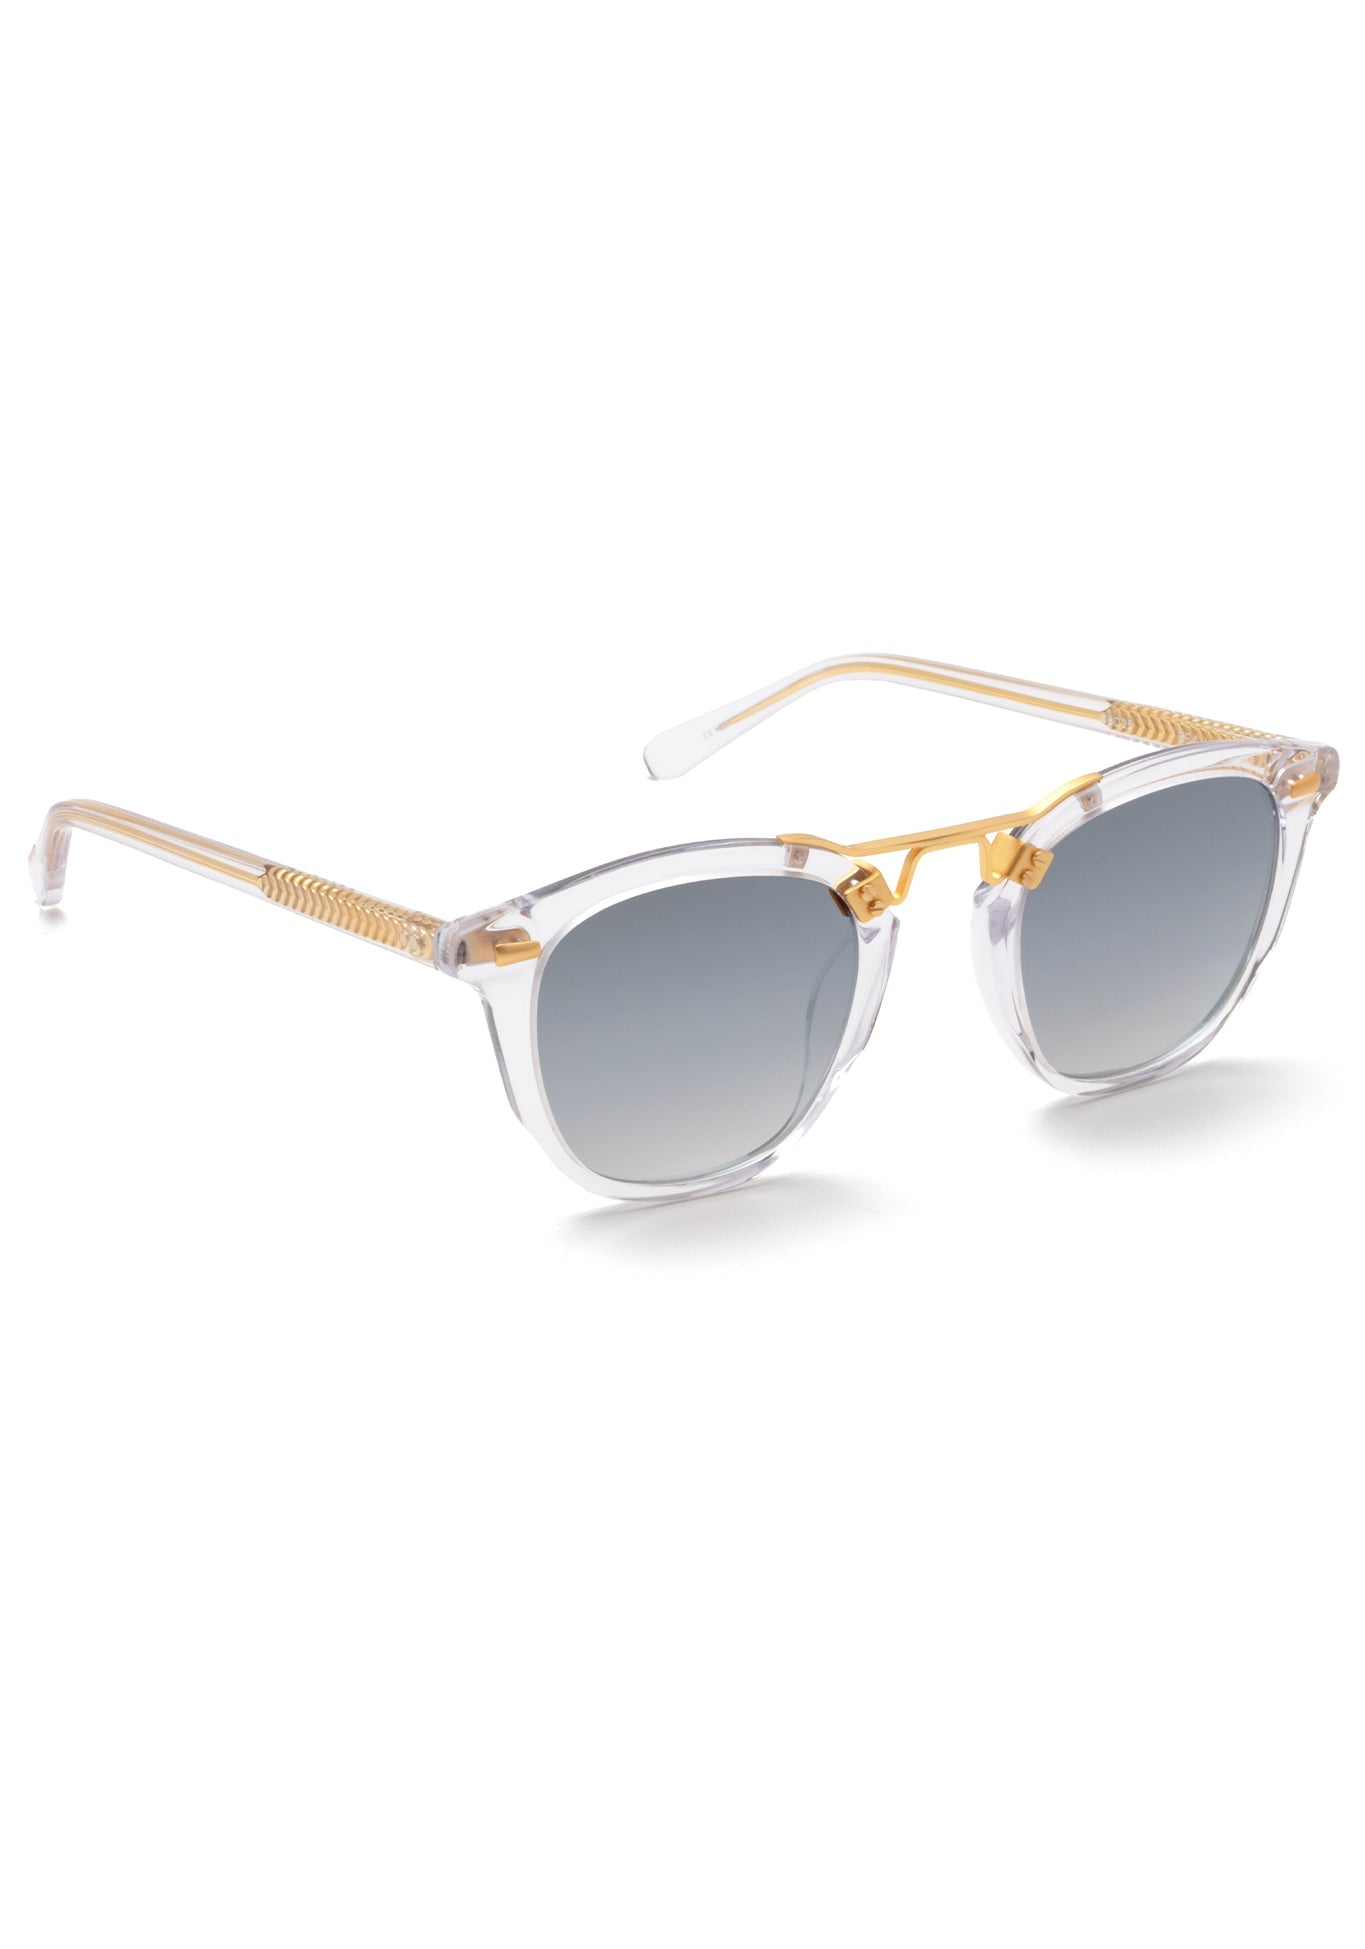 BEAU | Crystal Mirrored 24K Handcrafted, luxury clear acetate KREWE sunglasses